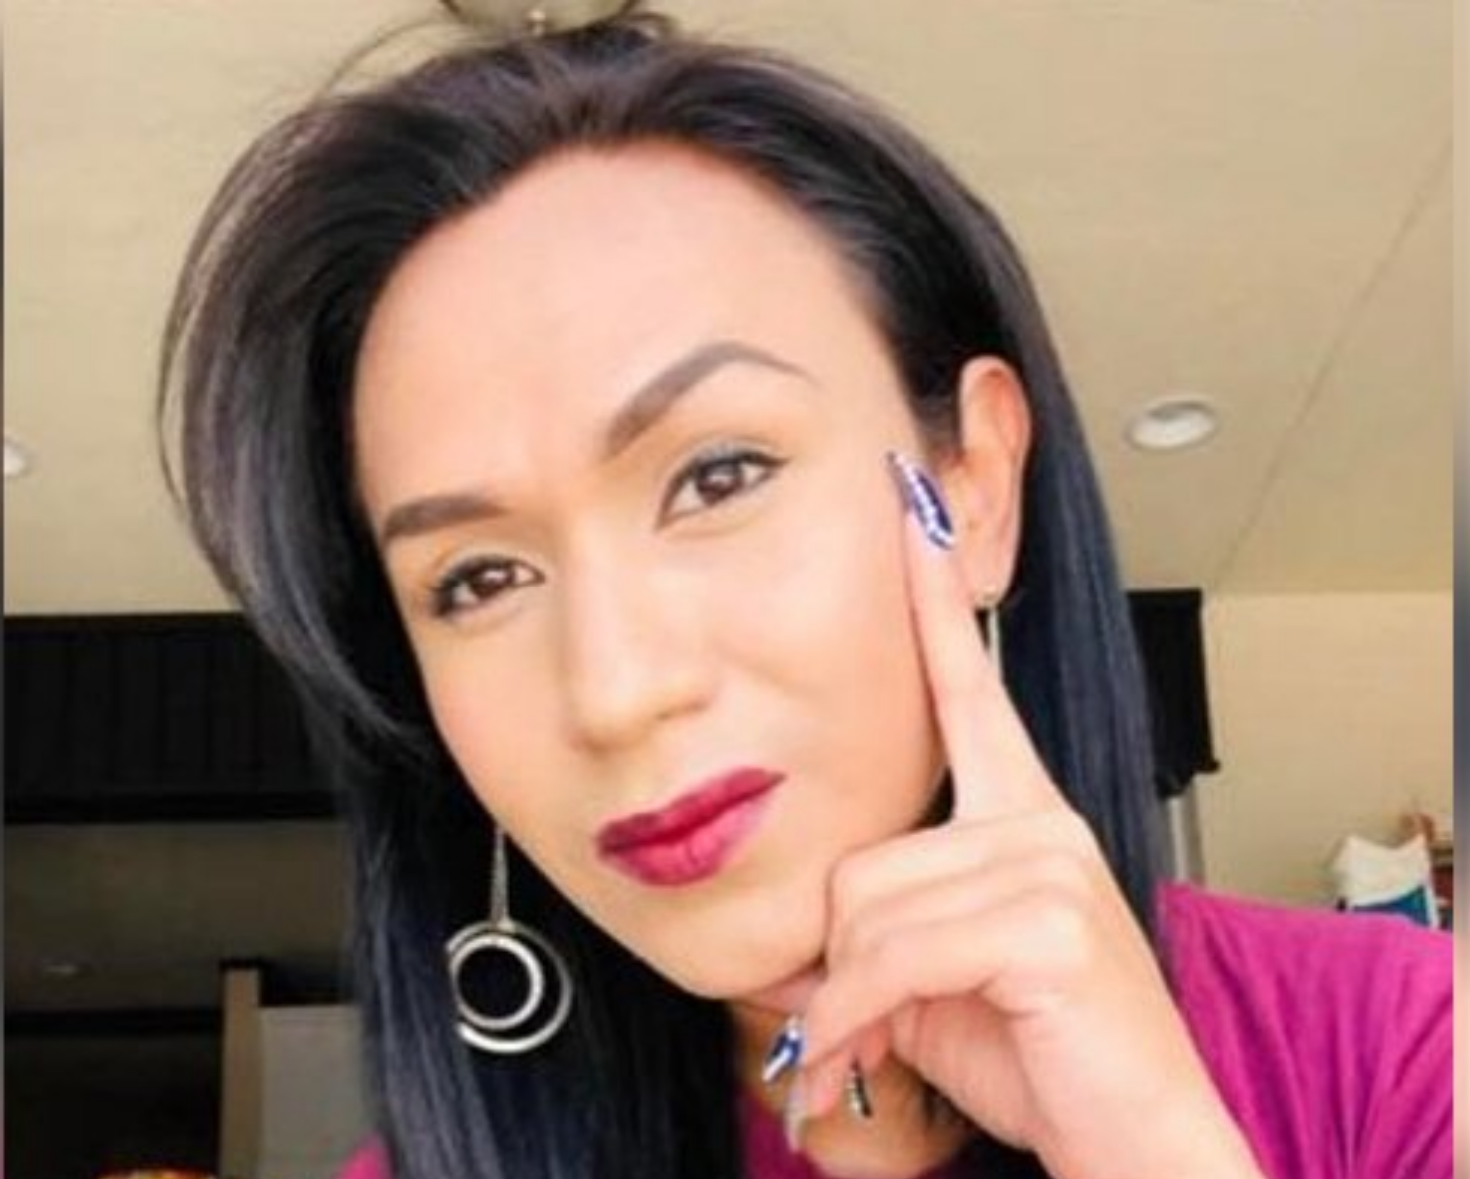 Transgender woman murdered in Houston fled gender violence in Latin America